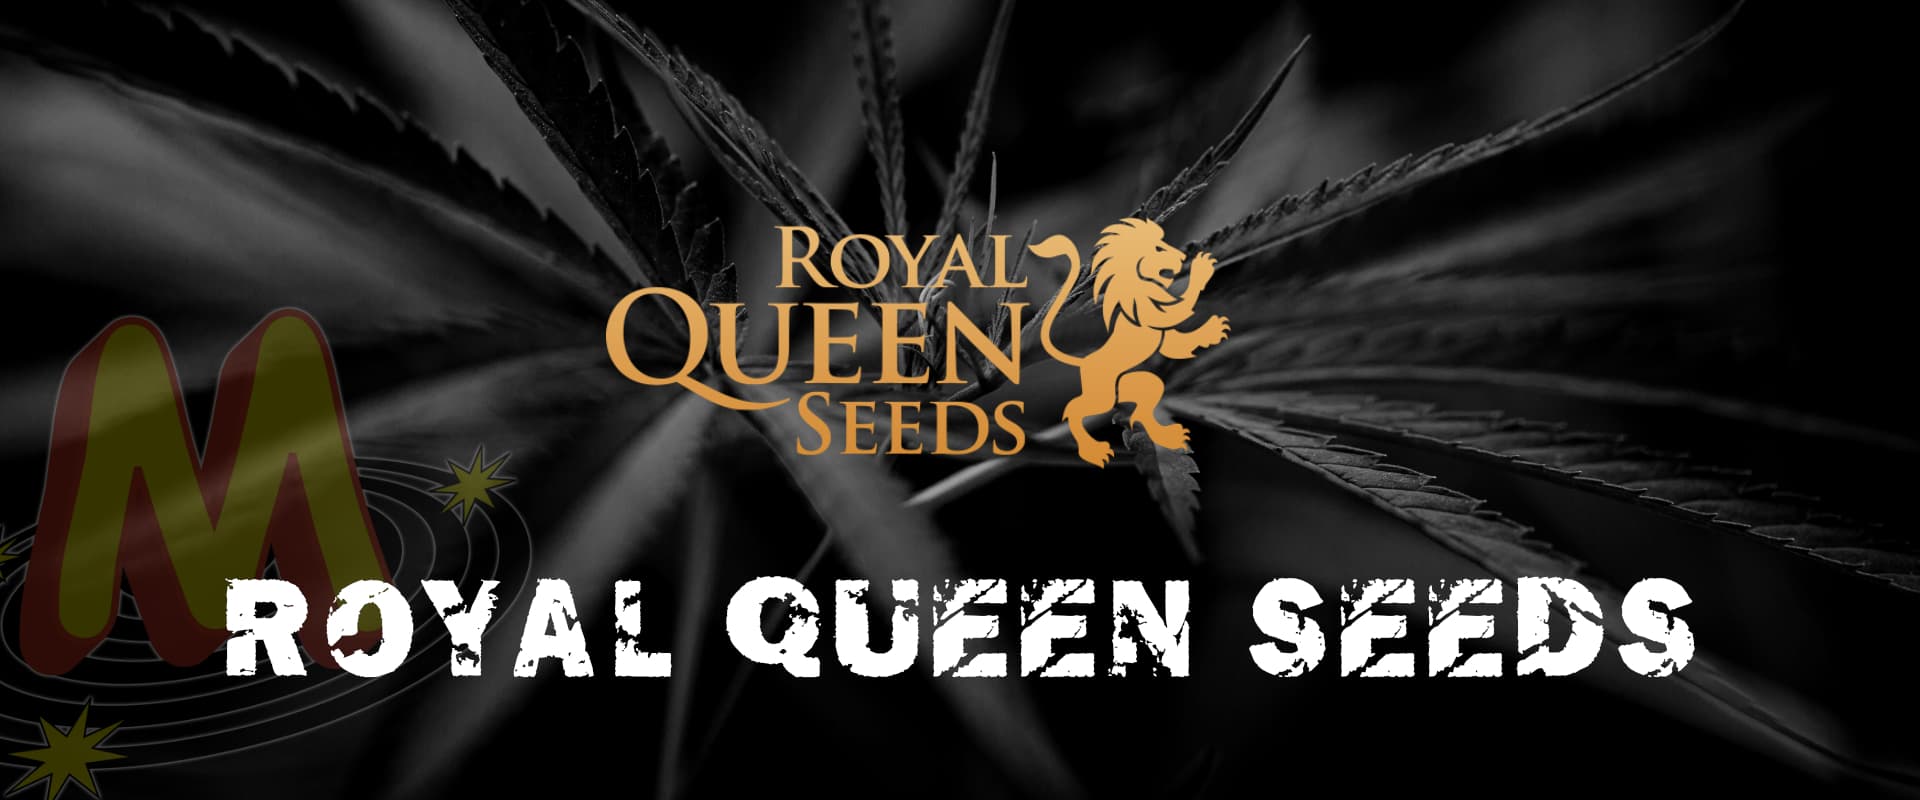 royal_queen_seeds_banner_seeds